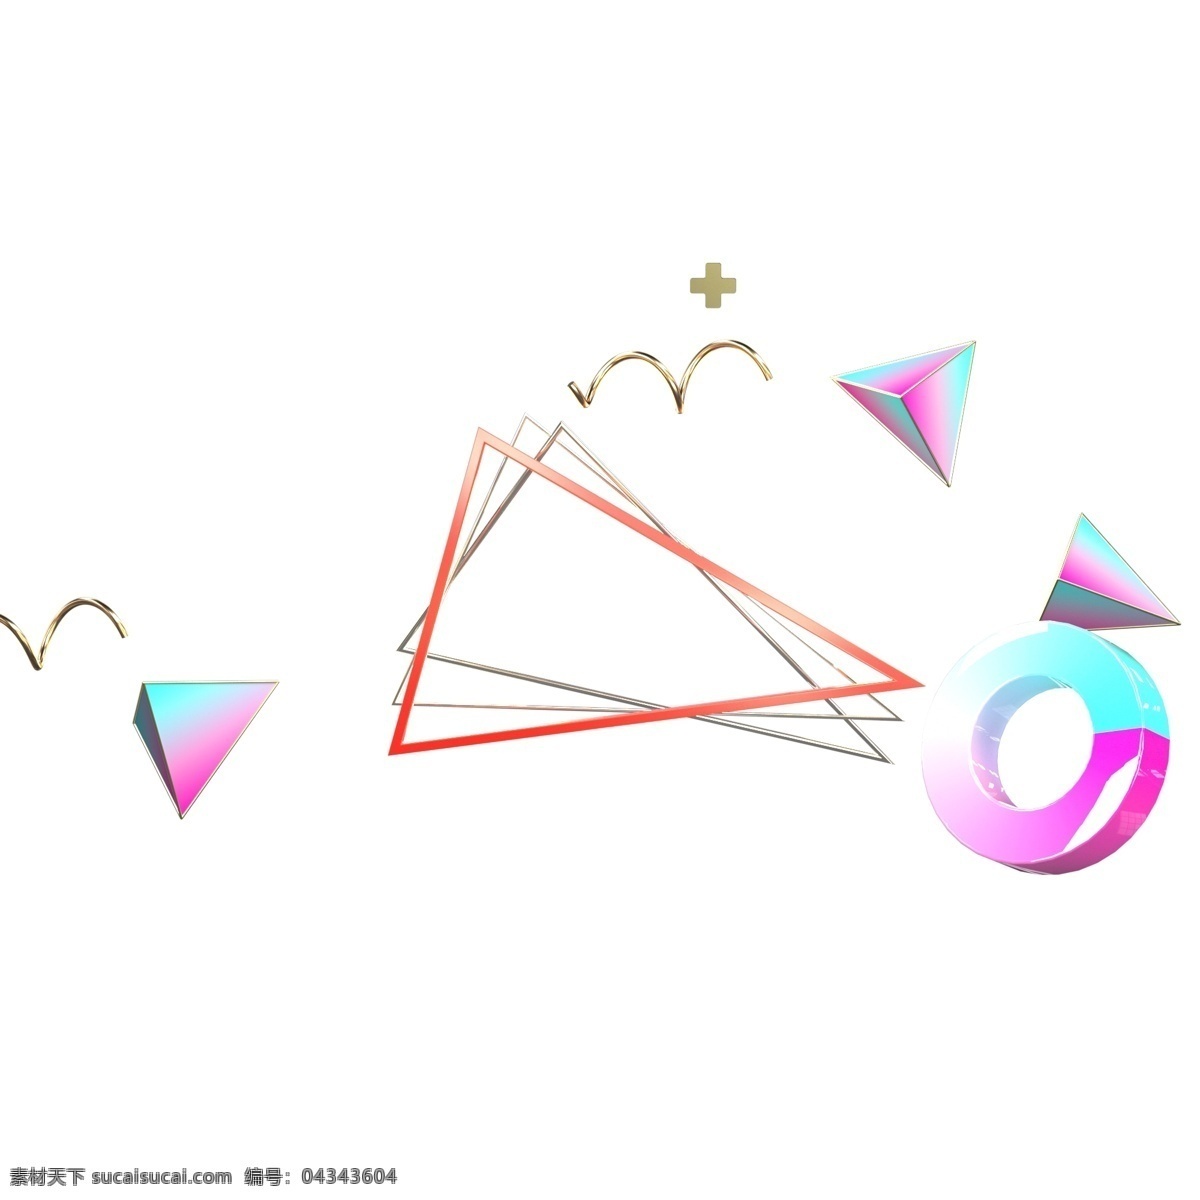 3d 立体 漂浮 几何 c4d 渐变 浅色 漂浮几何 线条 浅色渐变 马卡龙色 三角形 正方形 圆形